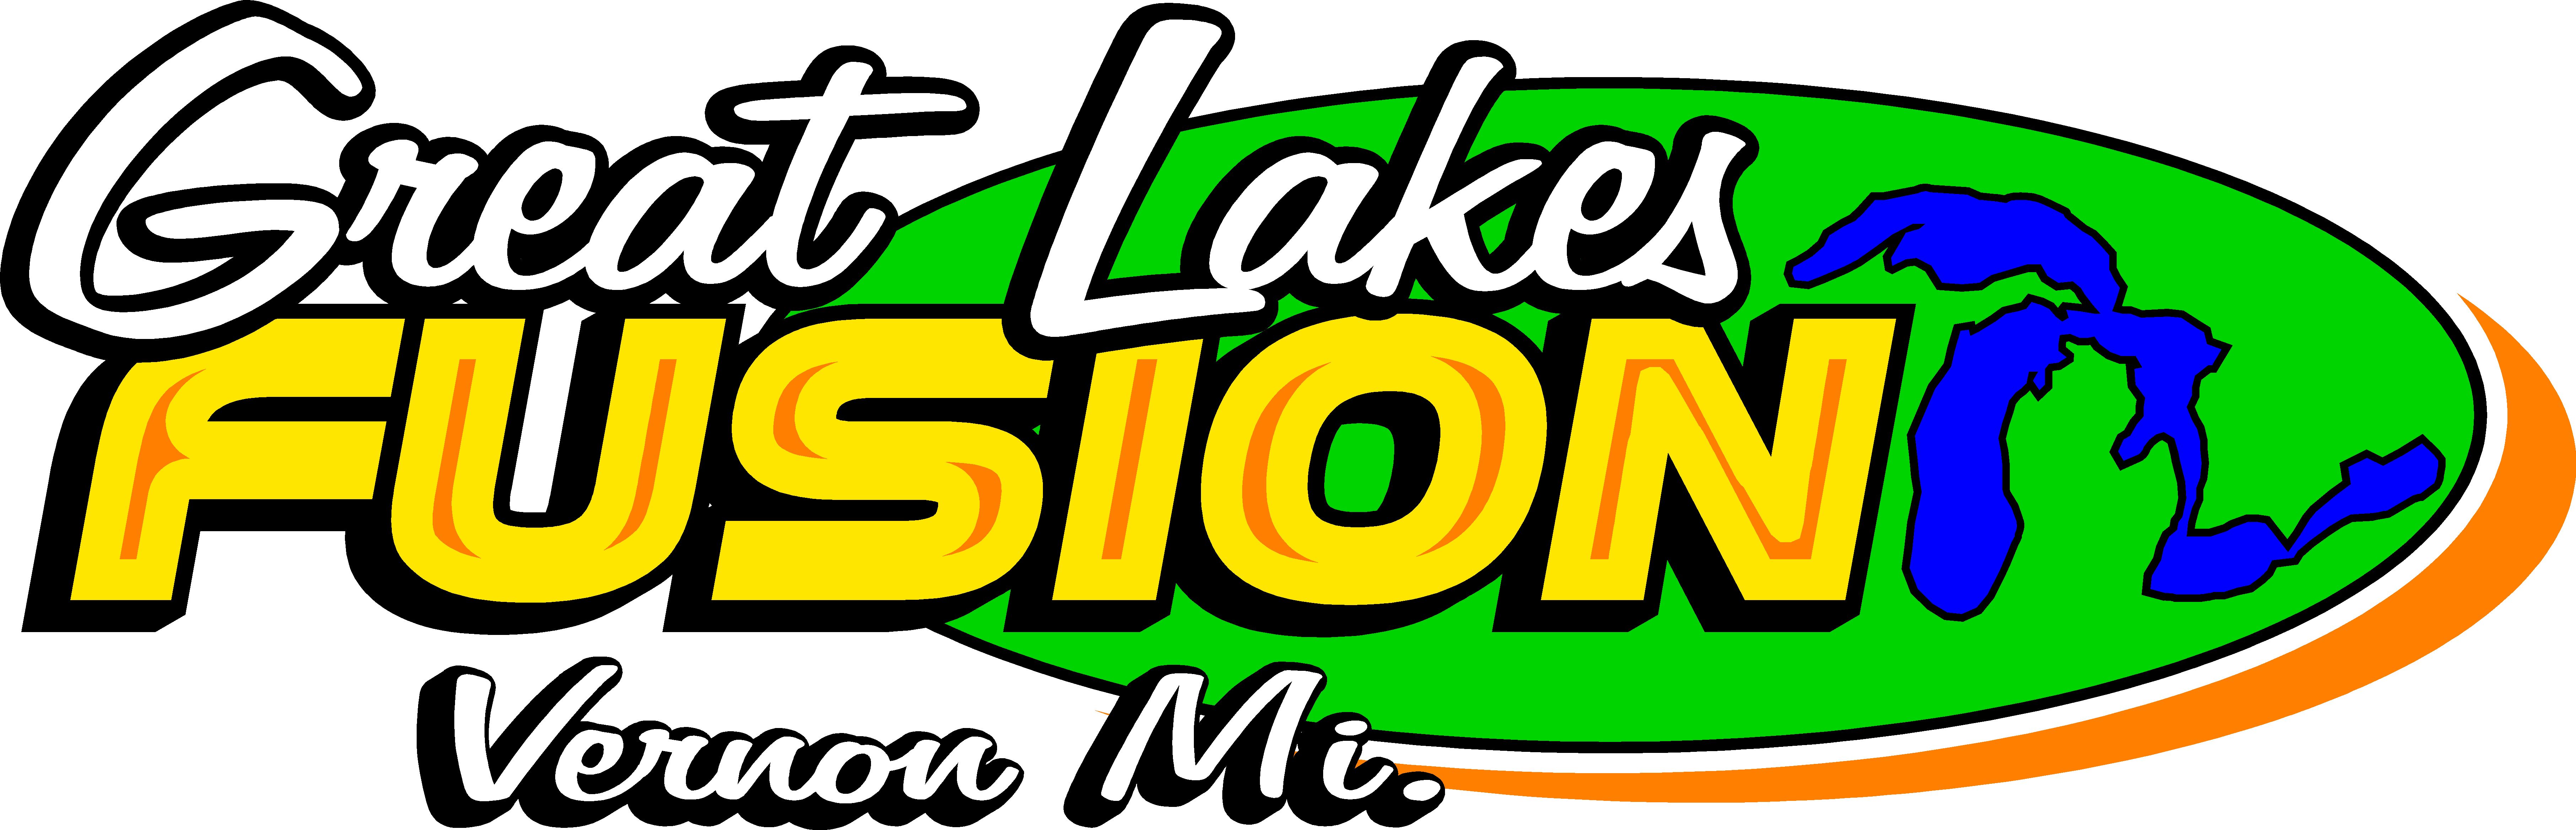 Great Lakes Fusion